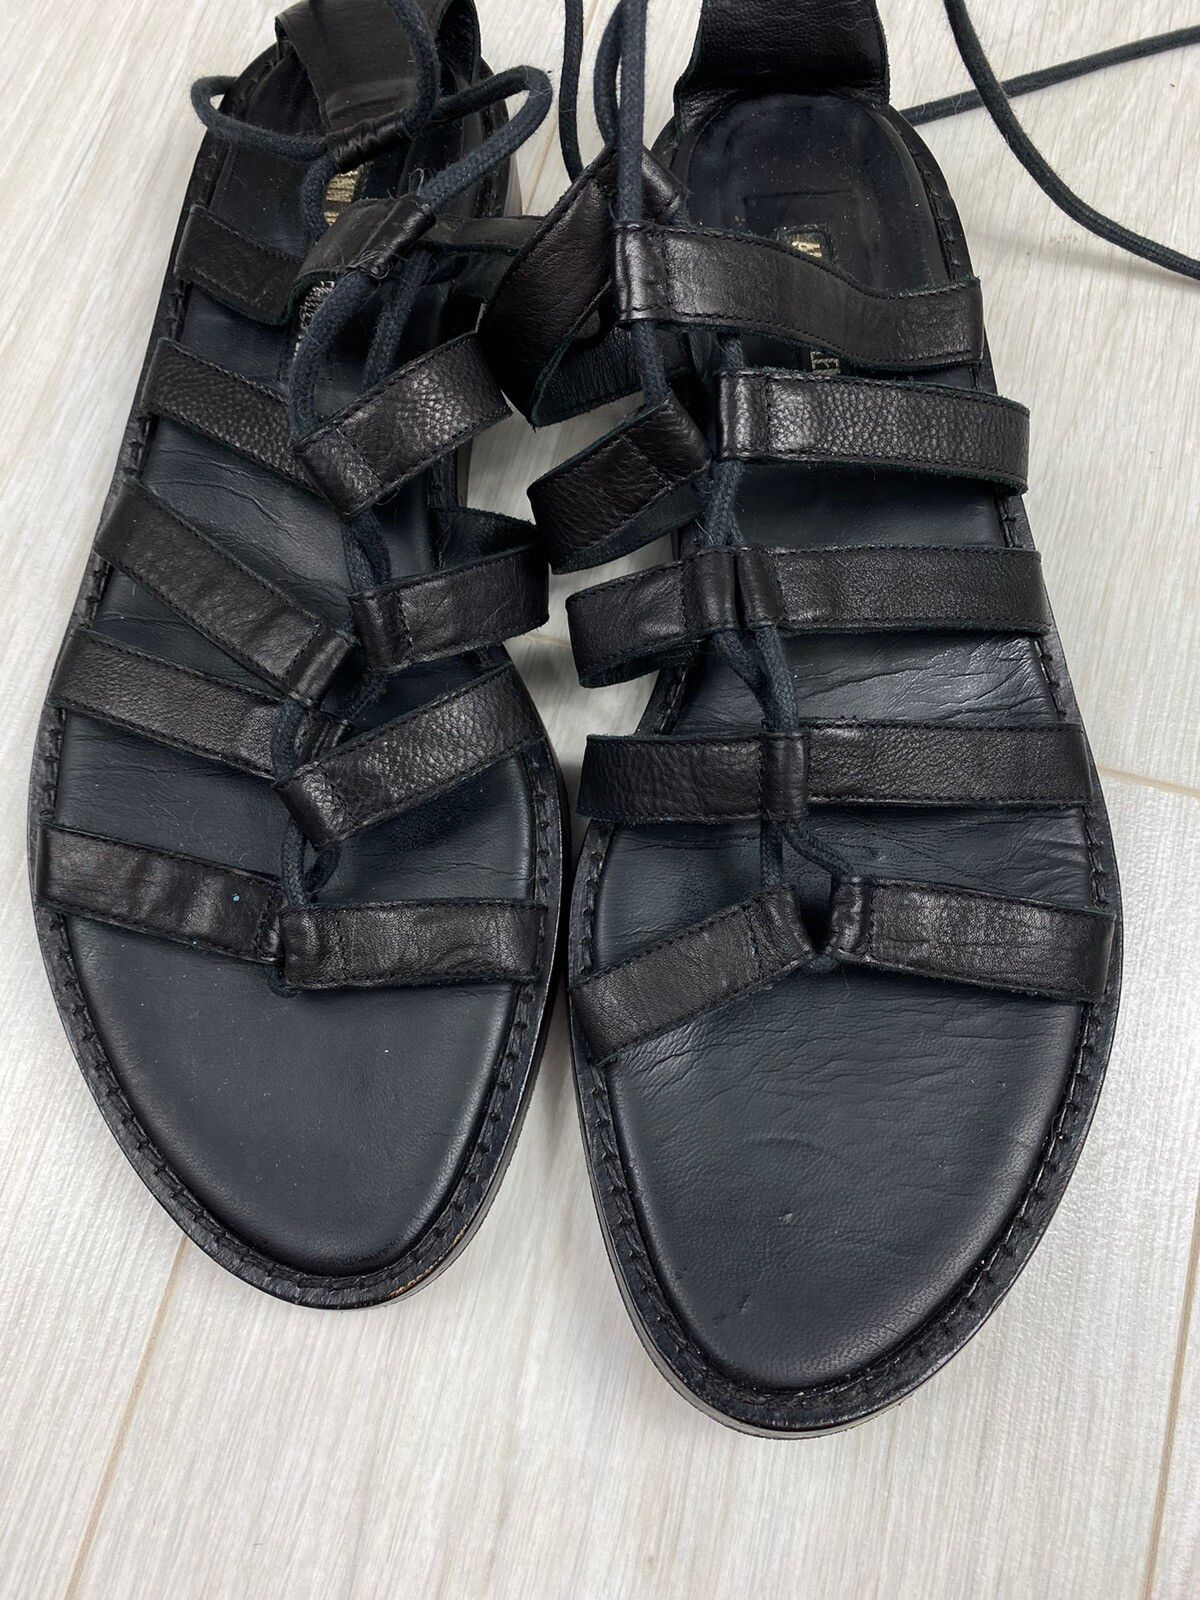 Vintage Ann Demeulemeester Leather Flat Gladiator Sandals High Size US 9 / EU 42 - 4 Thumbnail